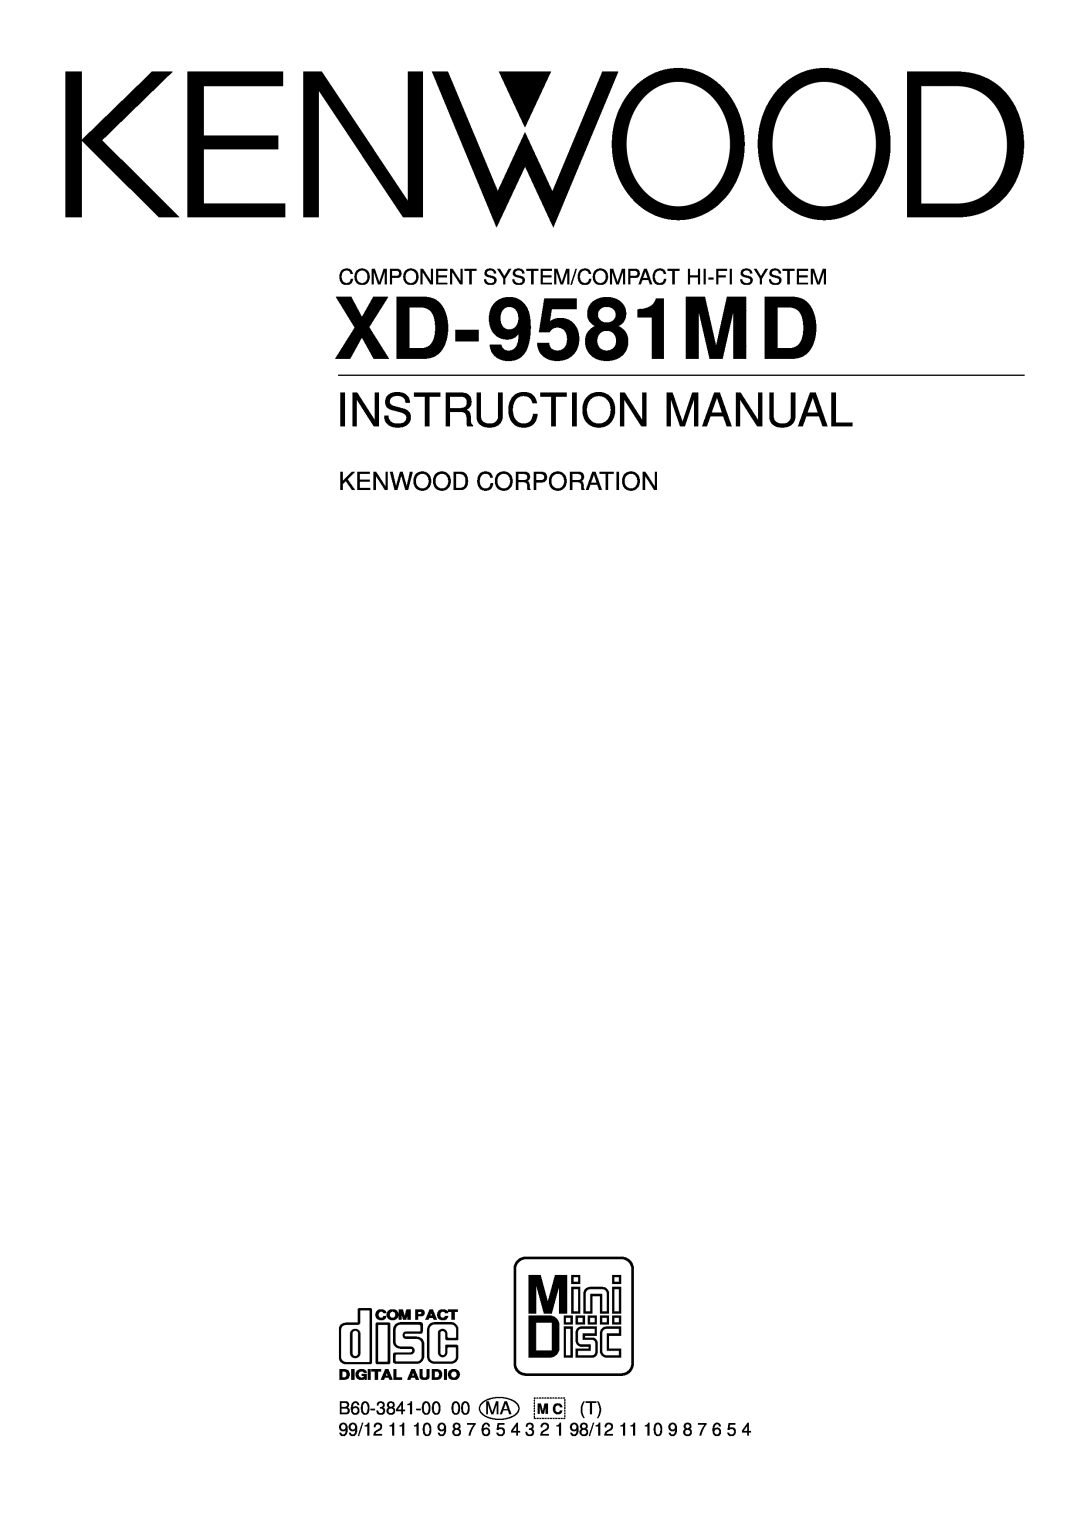 Kenwood XD-9581MD instruction manual Instruction Manual, Kenwood Corporation, Component System/Compact Hi-Fisystem 